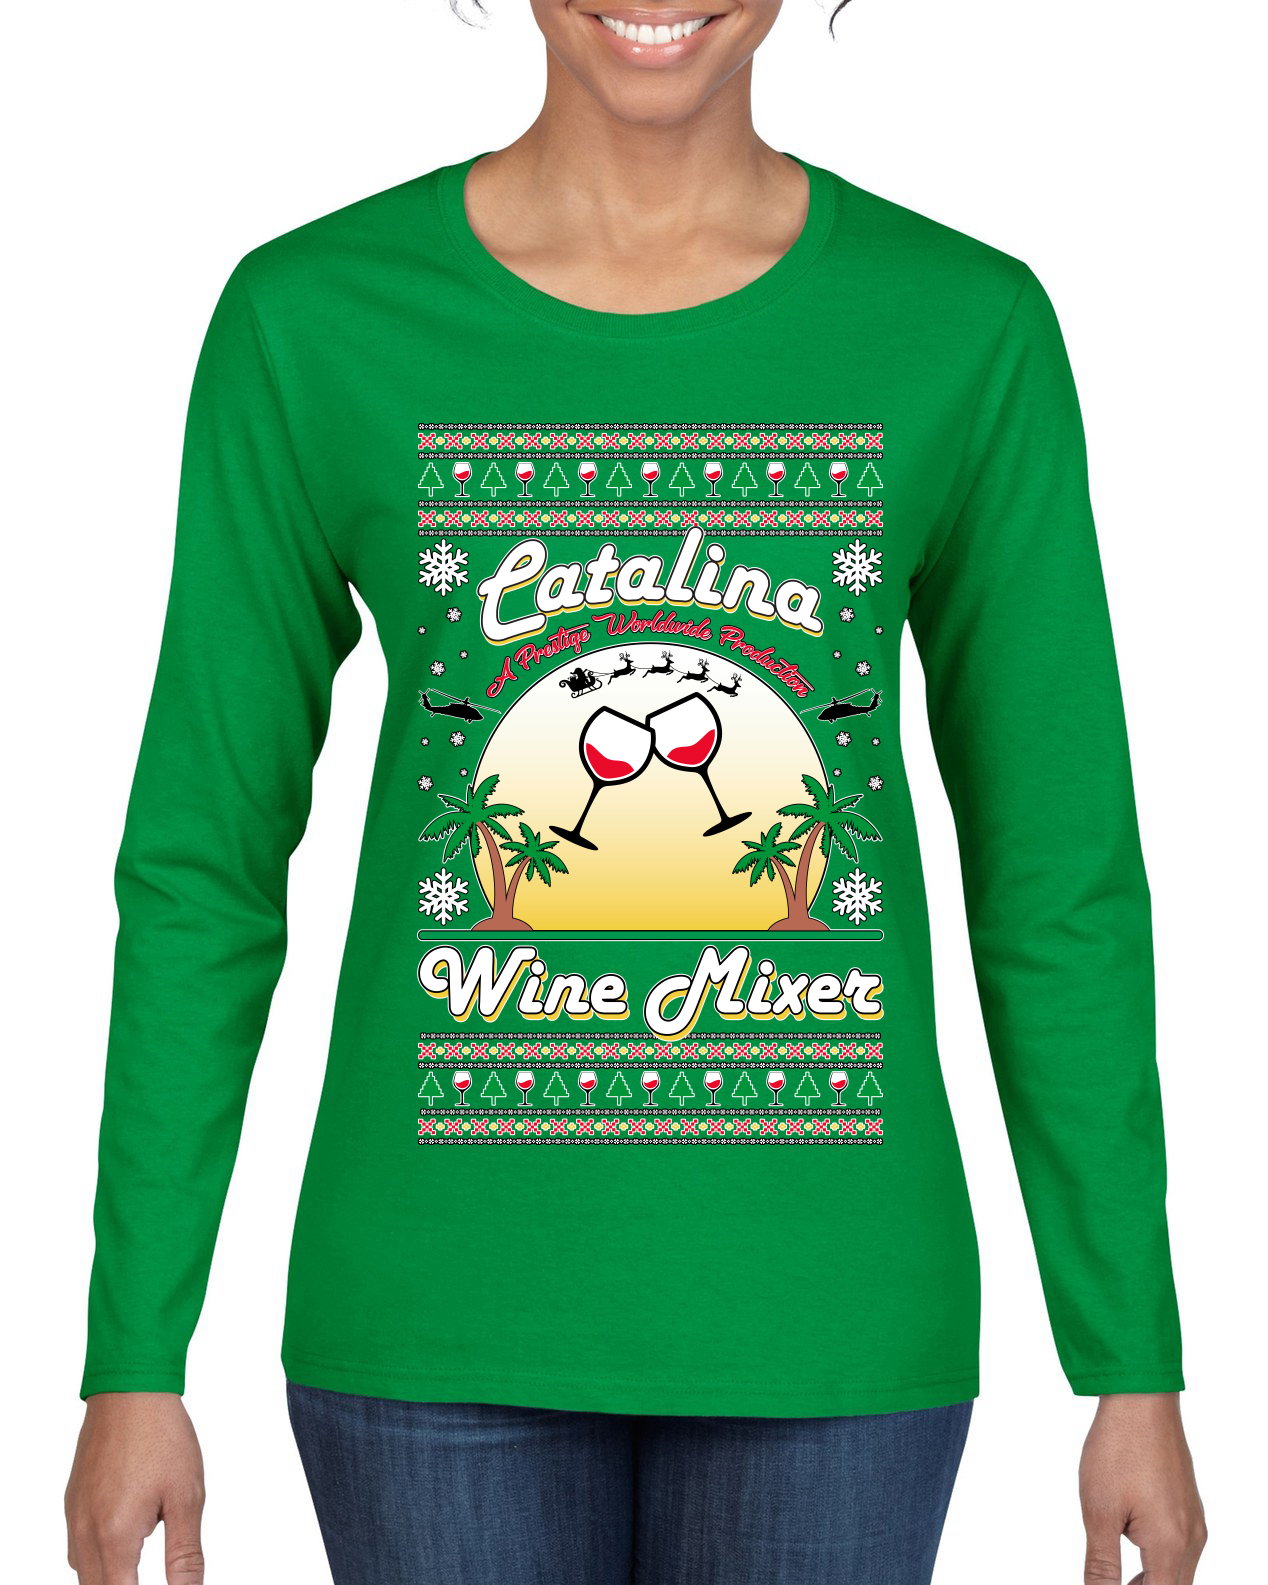 Wild Bobby, Step Bros Catalina Wine Mixer Xmas Holiday Movie Humor Ugly Christmas Sweater Women Graphic Long Sleeve Tee, Kelly, Small - image 1 of 5